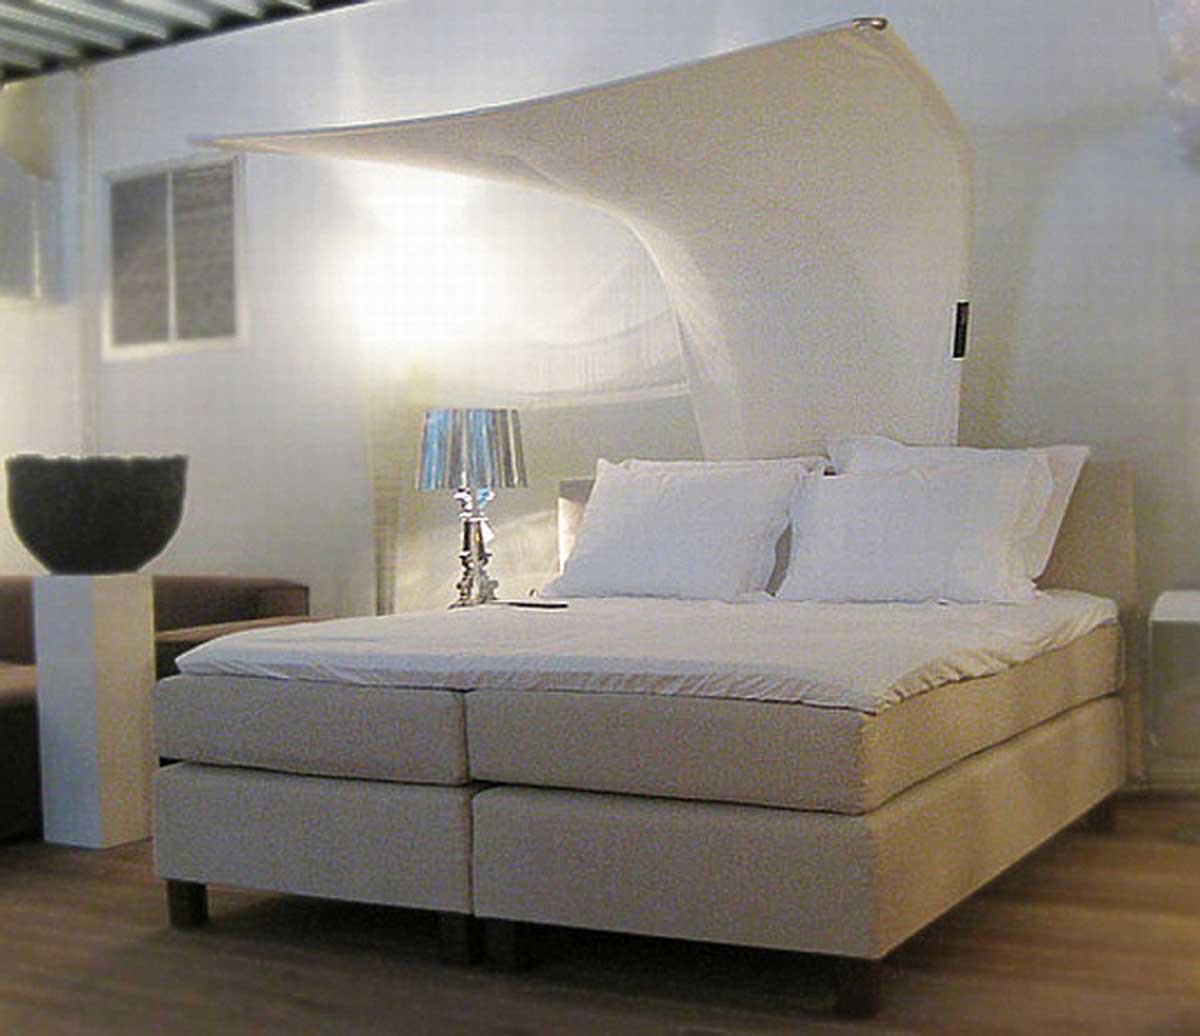 Desain Interior Kamar Tidur Minimalis Modern